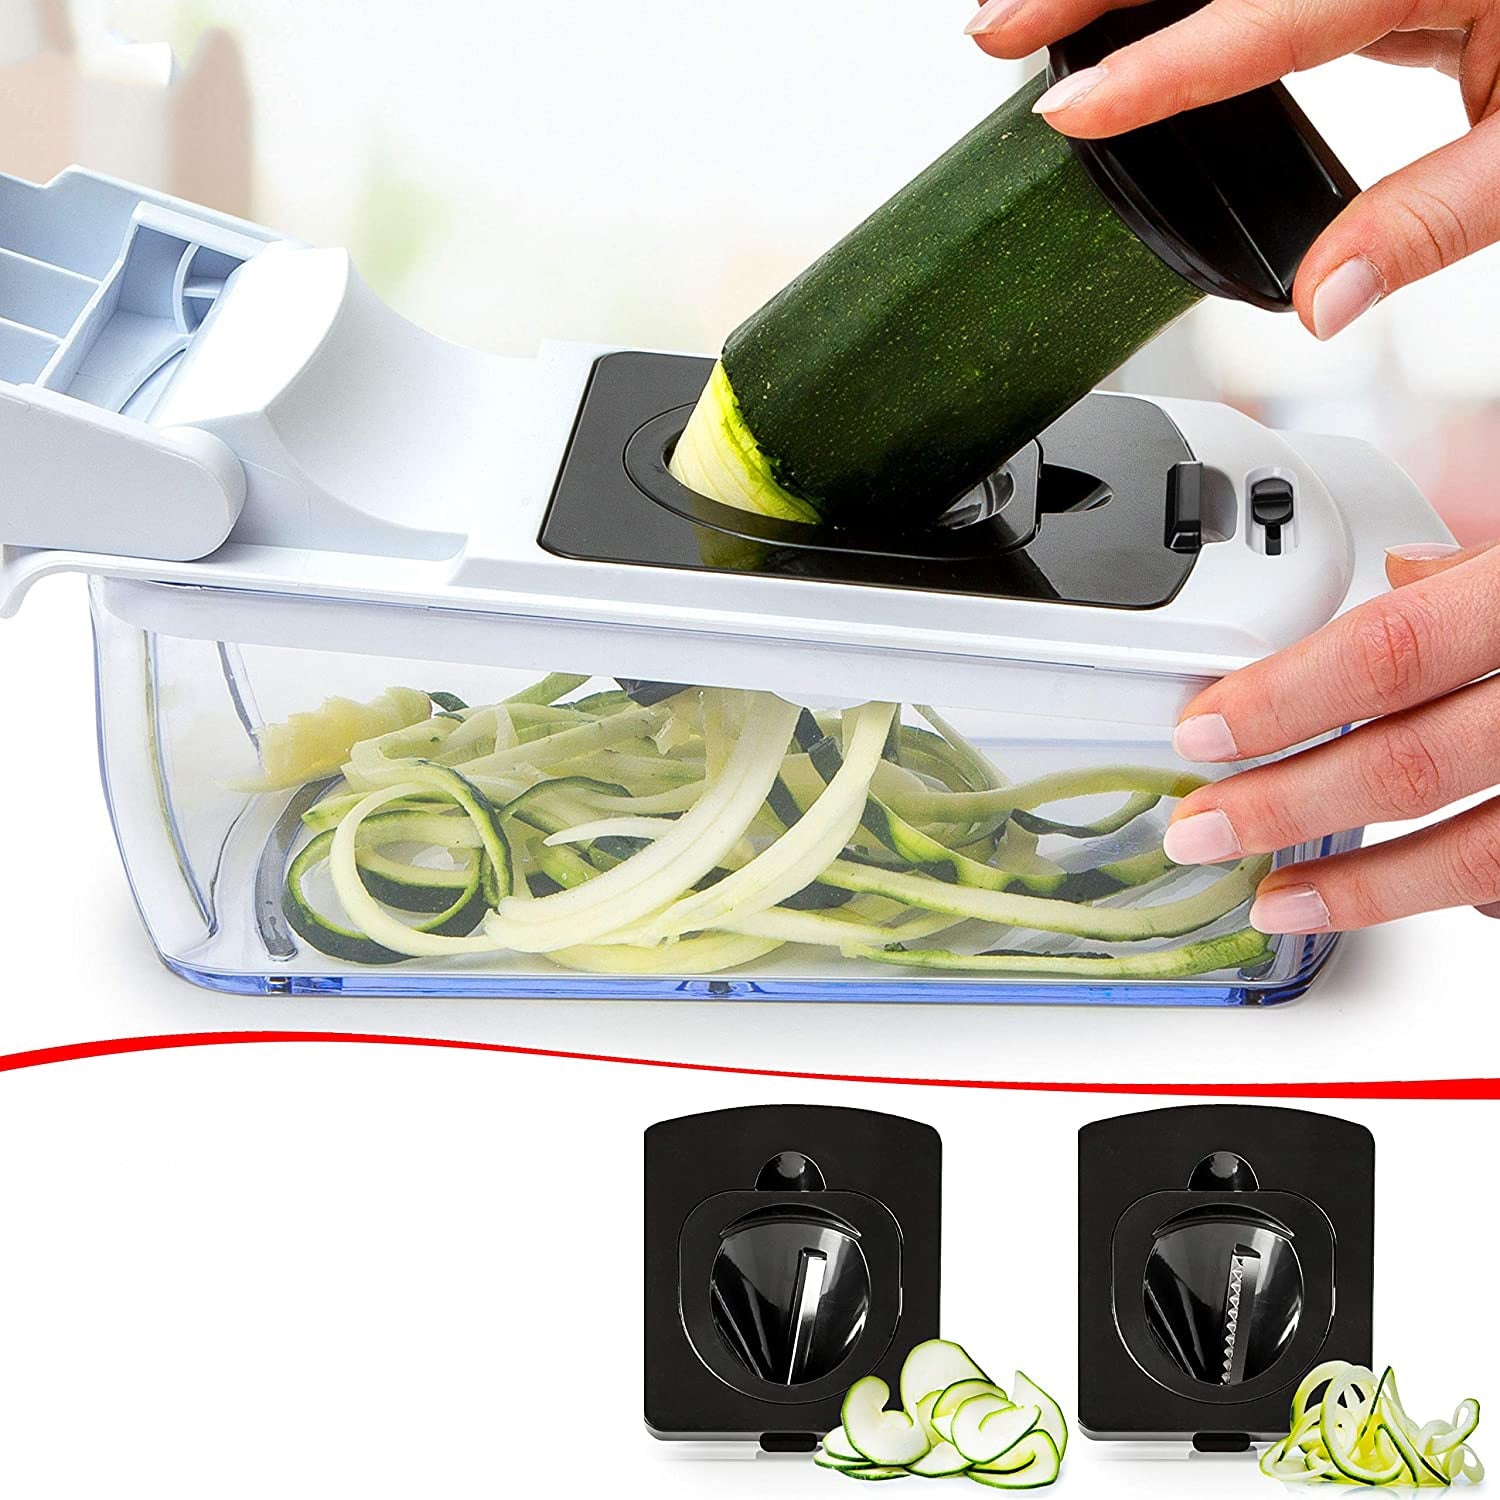 The Z1 Multifunctional Vegetable Cutter – Gadgetz1